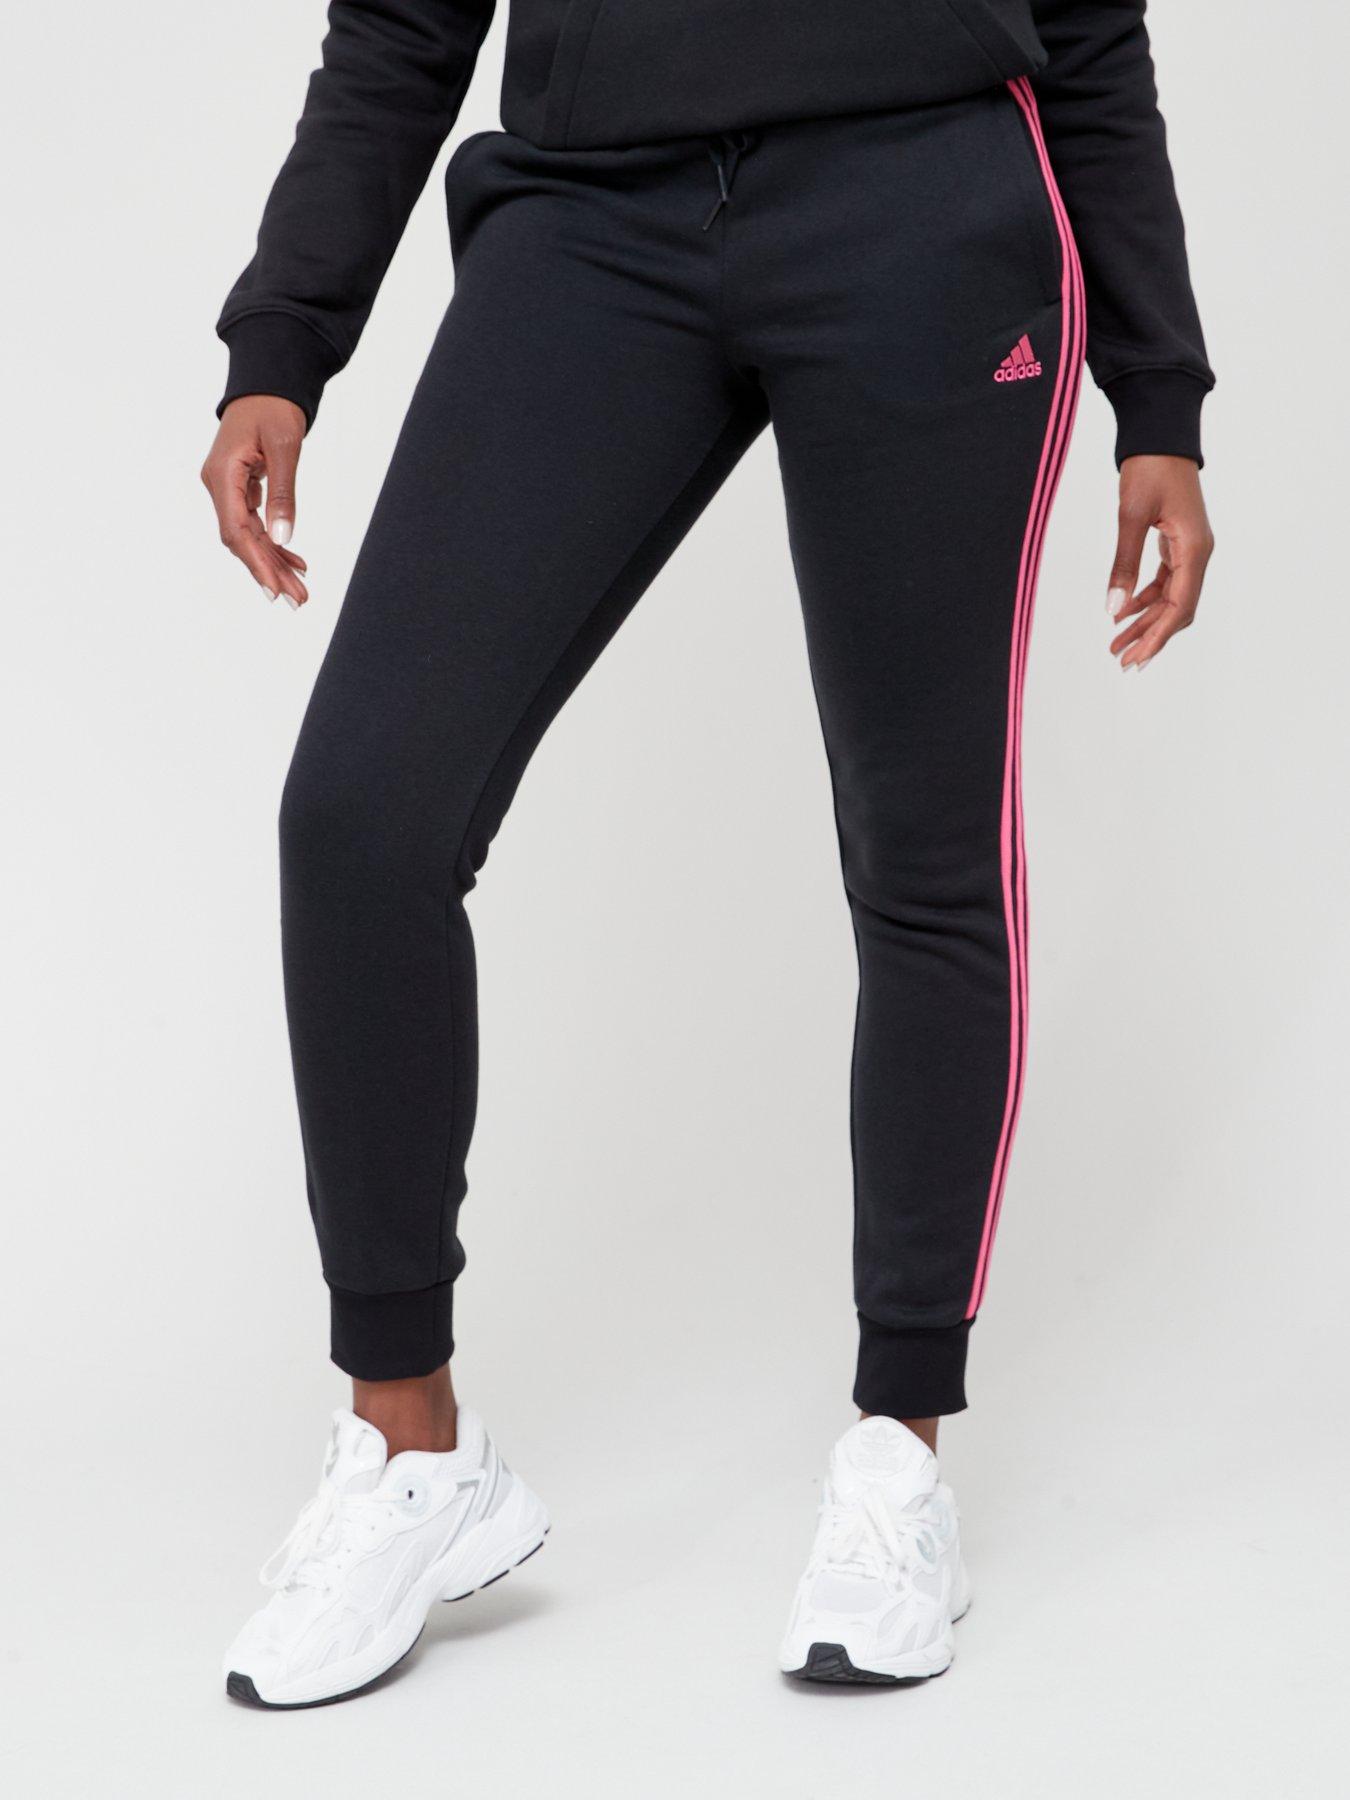 Adidas Pants Women M Blue Pink Stripes Sweatpants Stretch Workout Pockets 